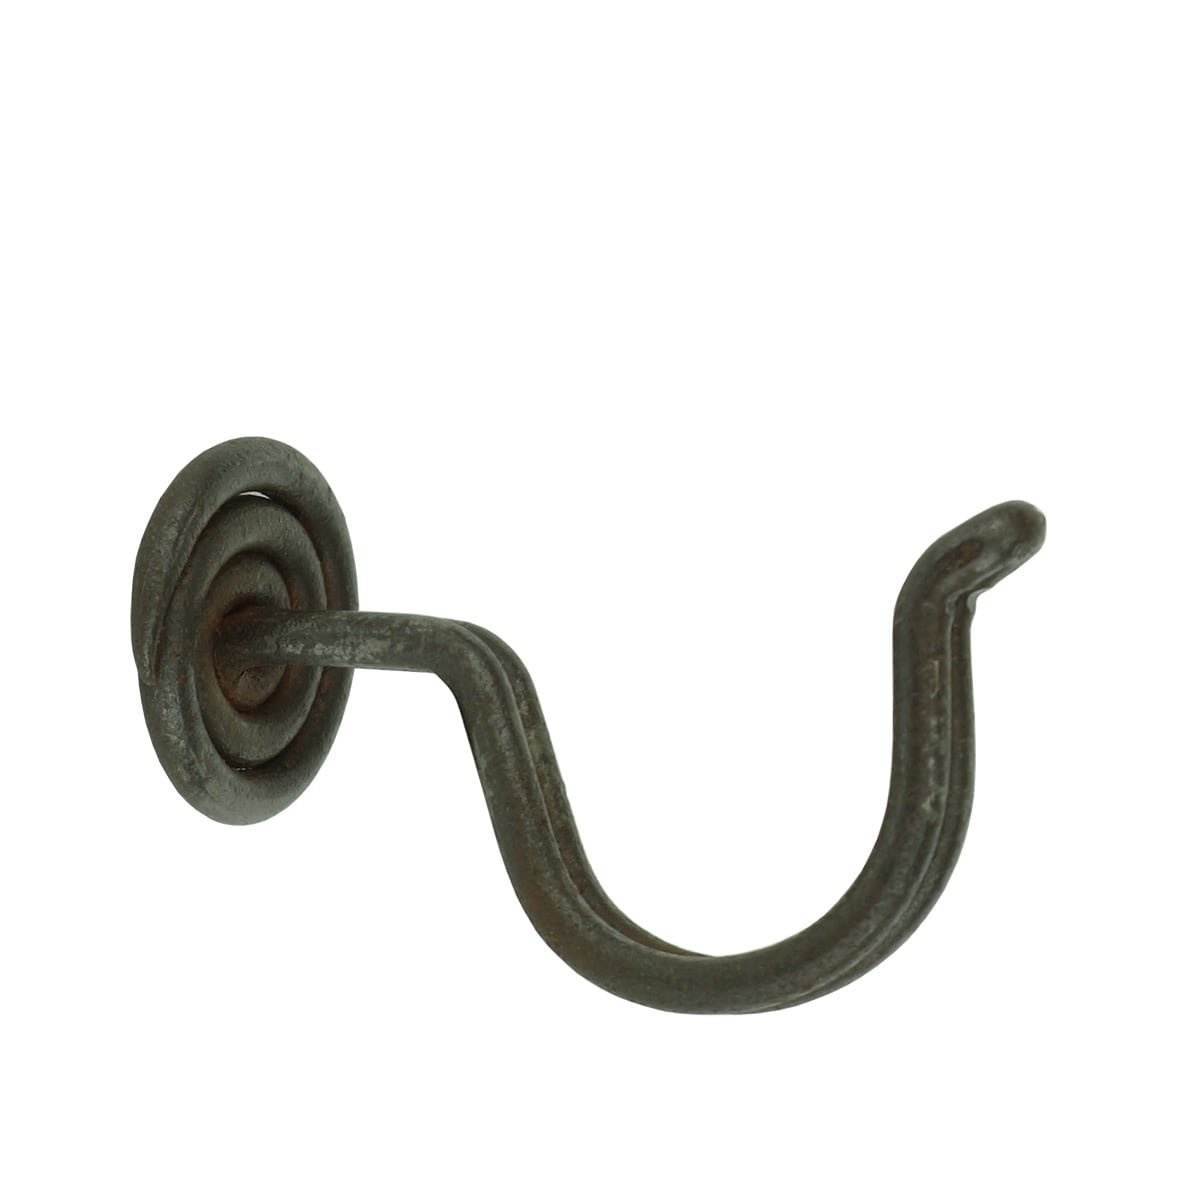 Crochet fil de fer brun brocant Speyer - 30 mm